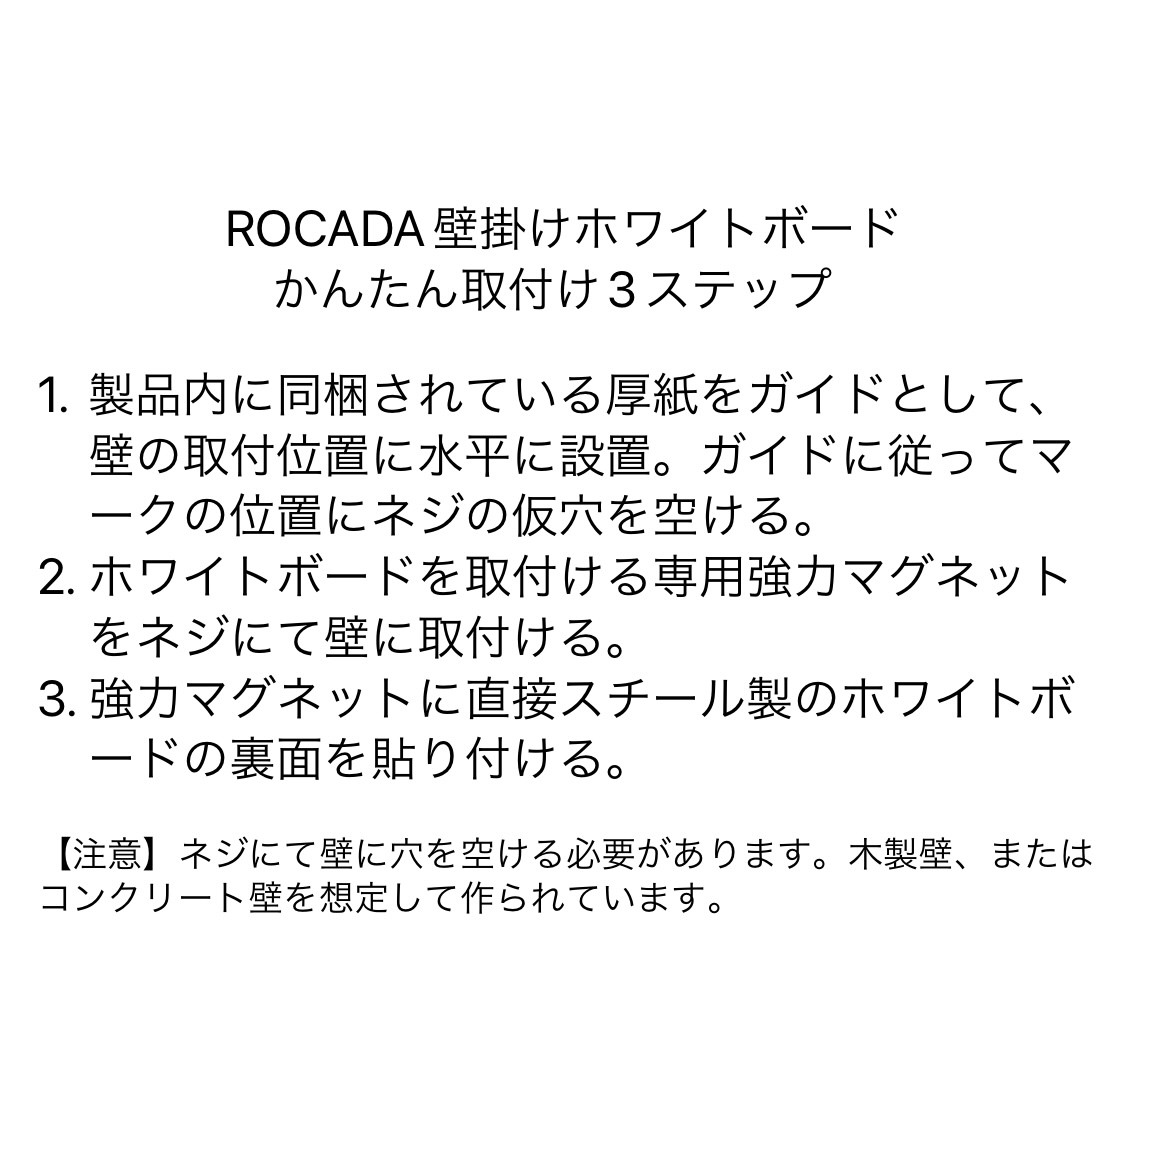 Rocada Japan - Yahoo!ショッピング